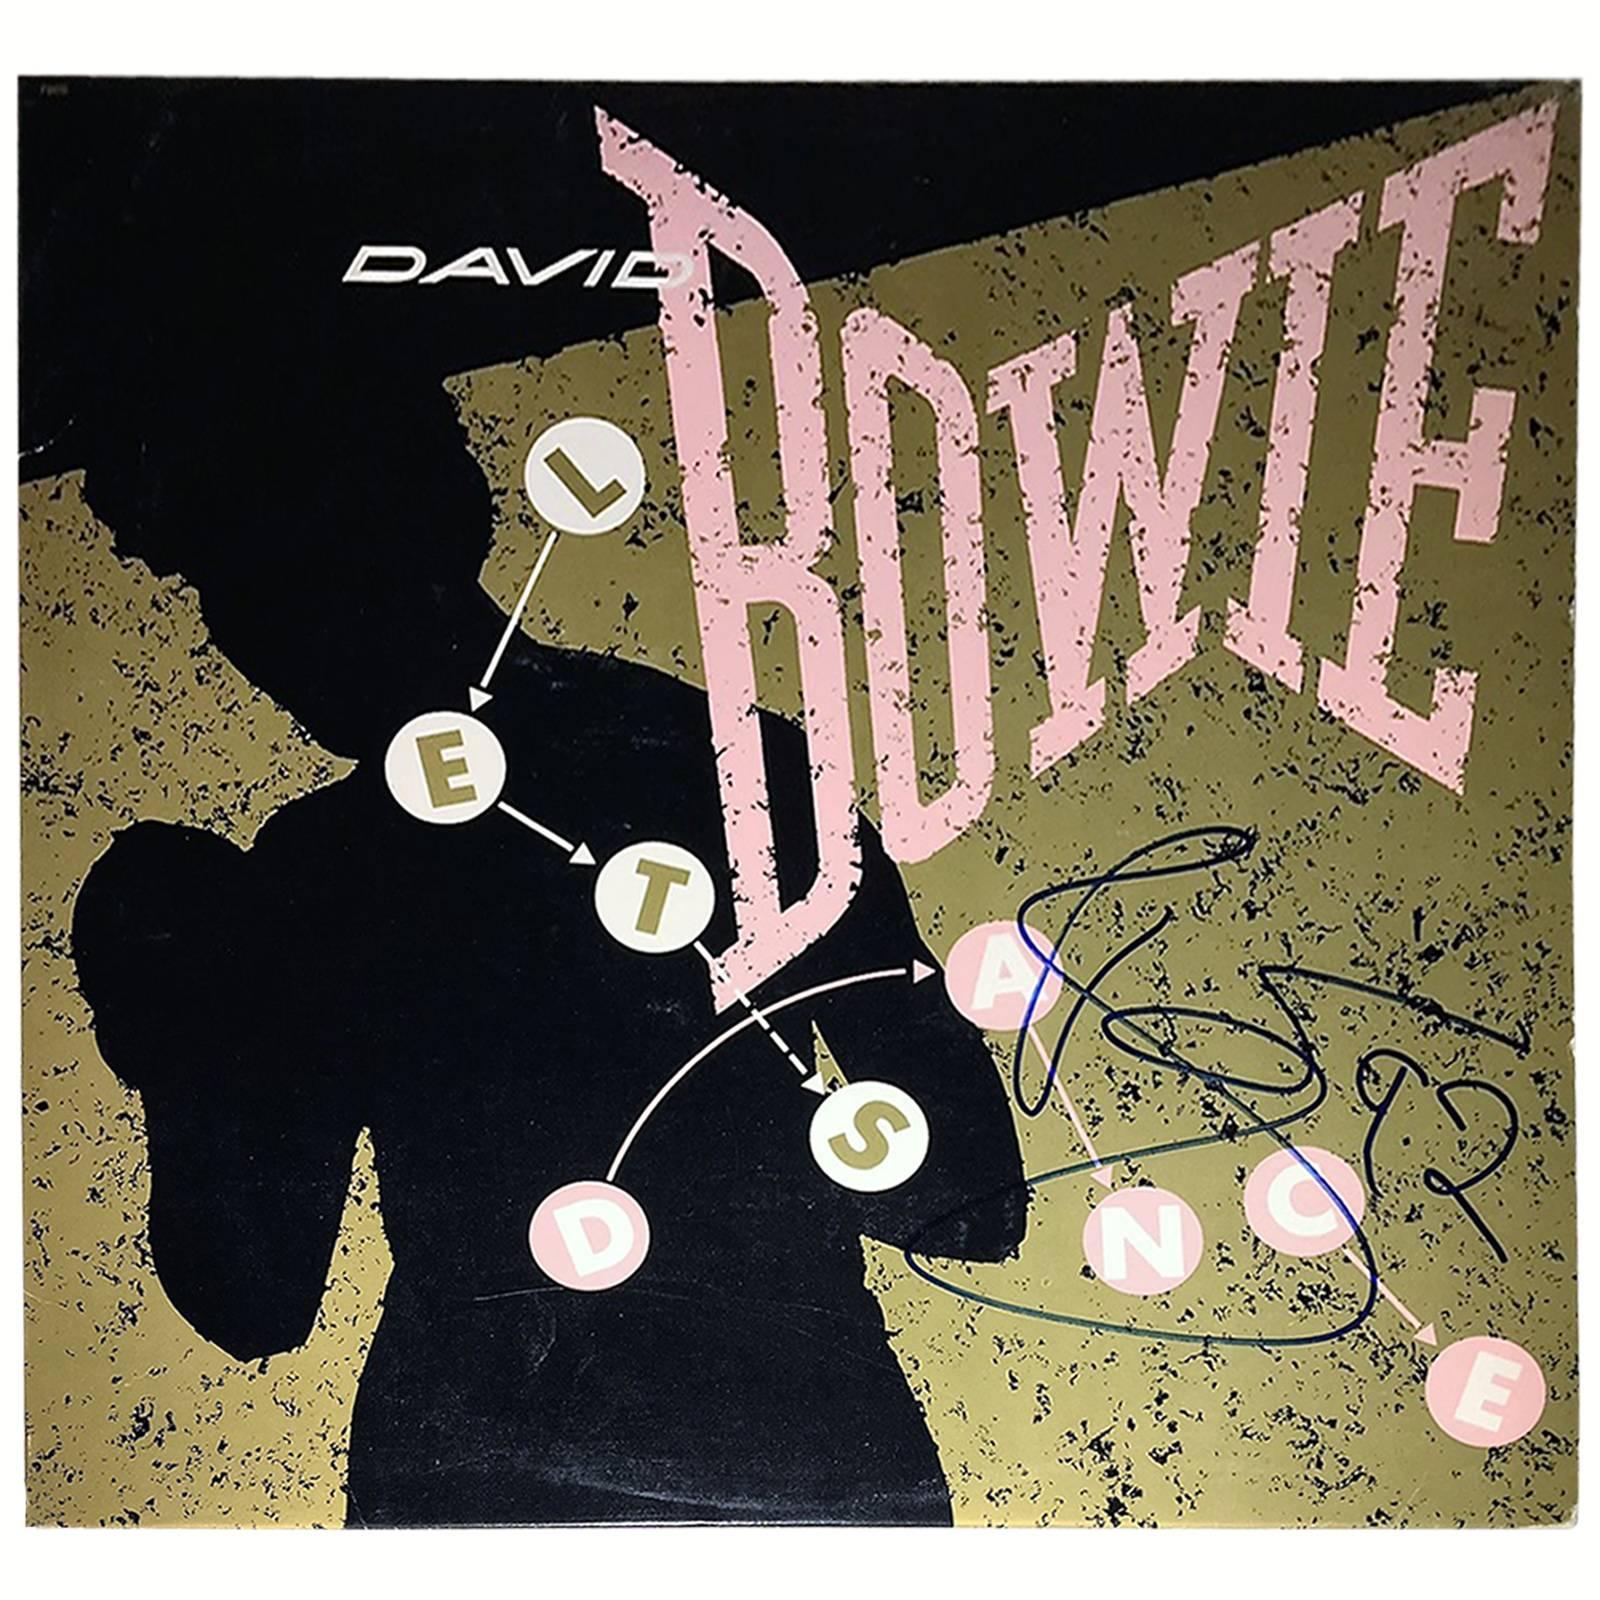 David Bowie Autographed 'Let's Dance' Single Record Cover For Sale